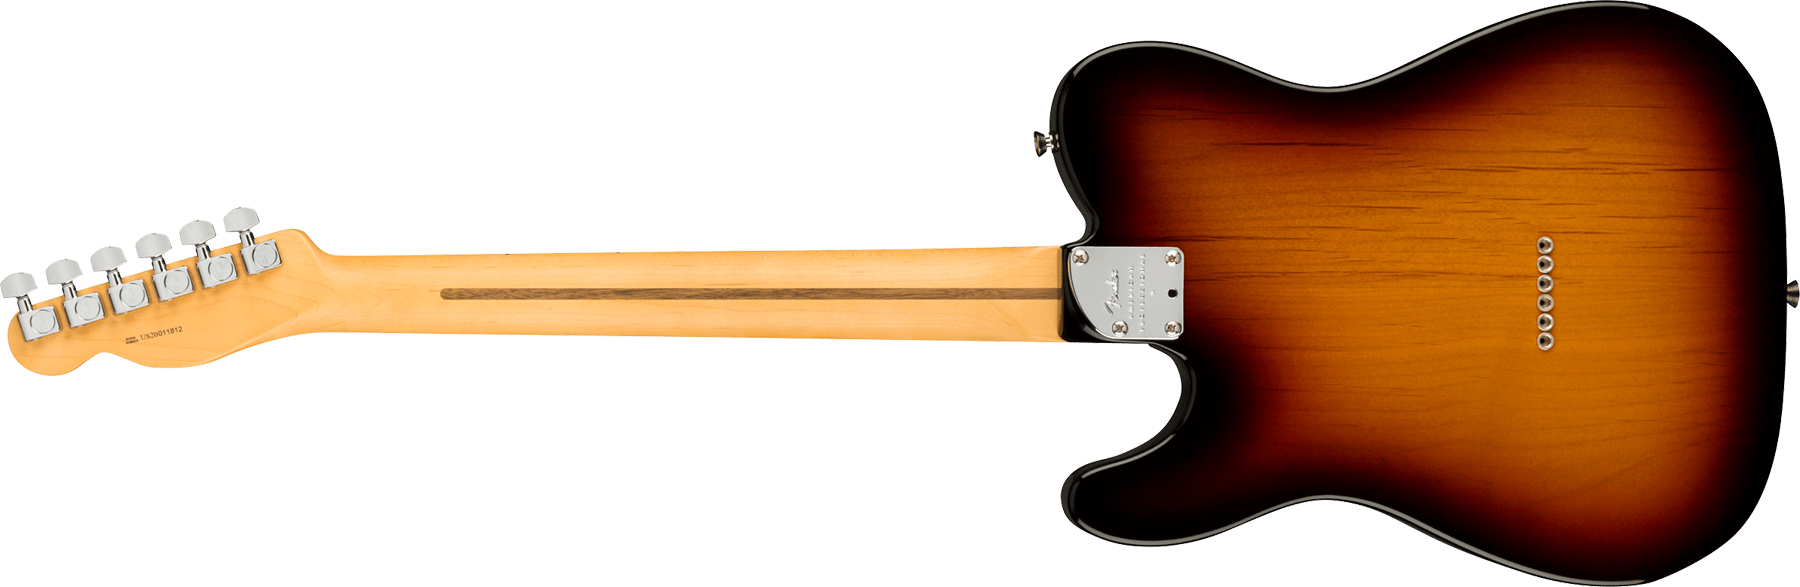 Fender Tele American Professional Ii Usa Mn - 3-color Sunburst - Tel shape electric guitar - Variation 1